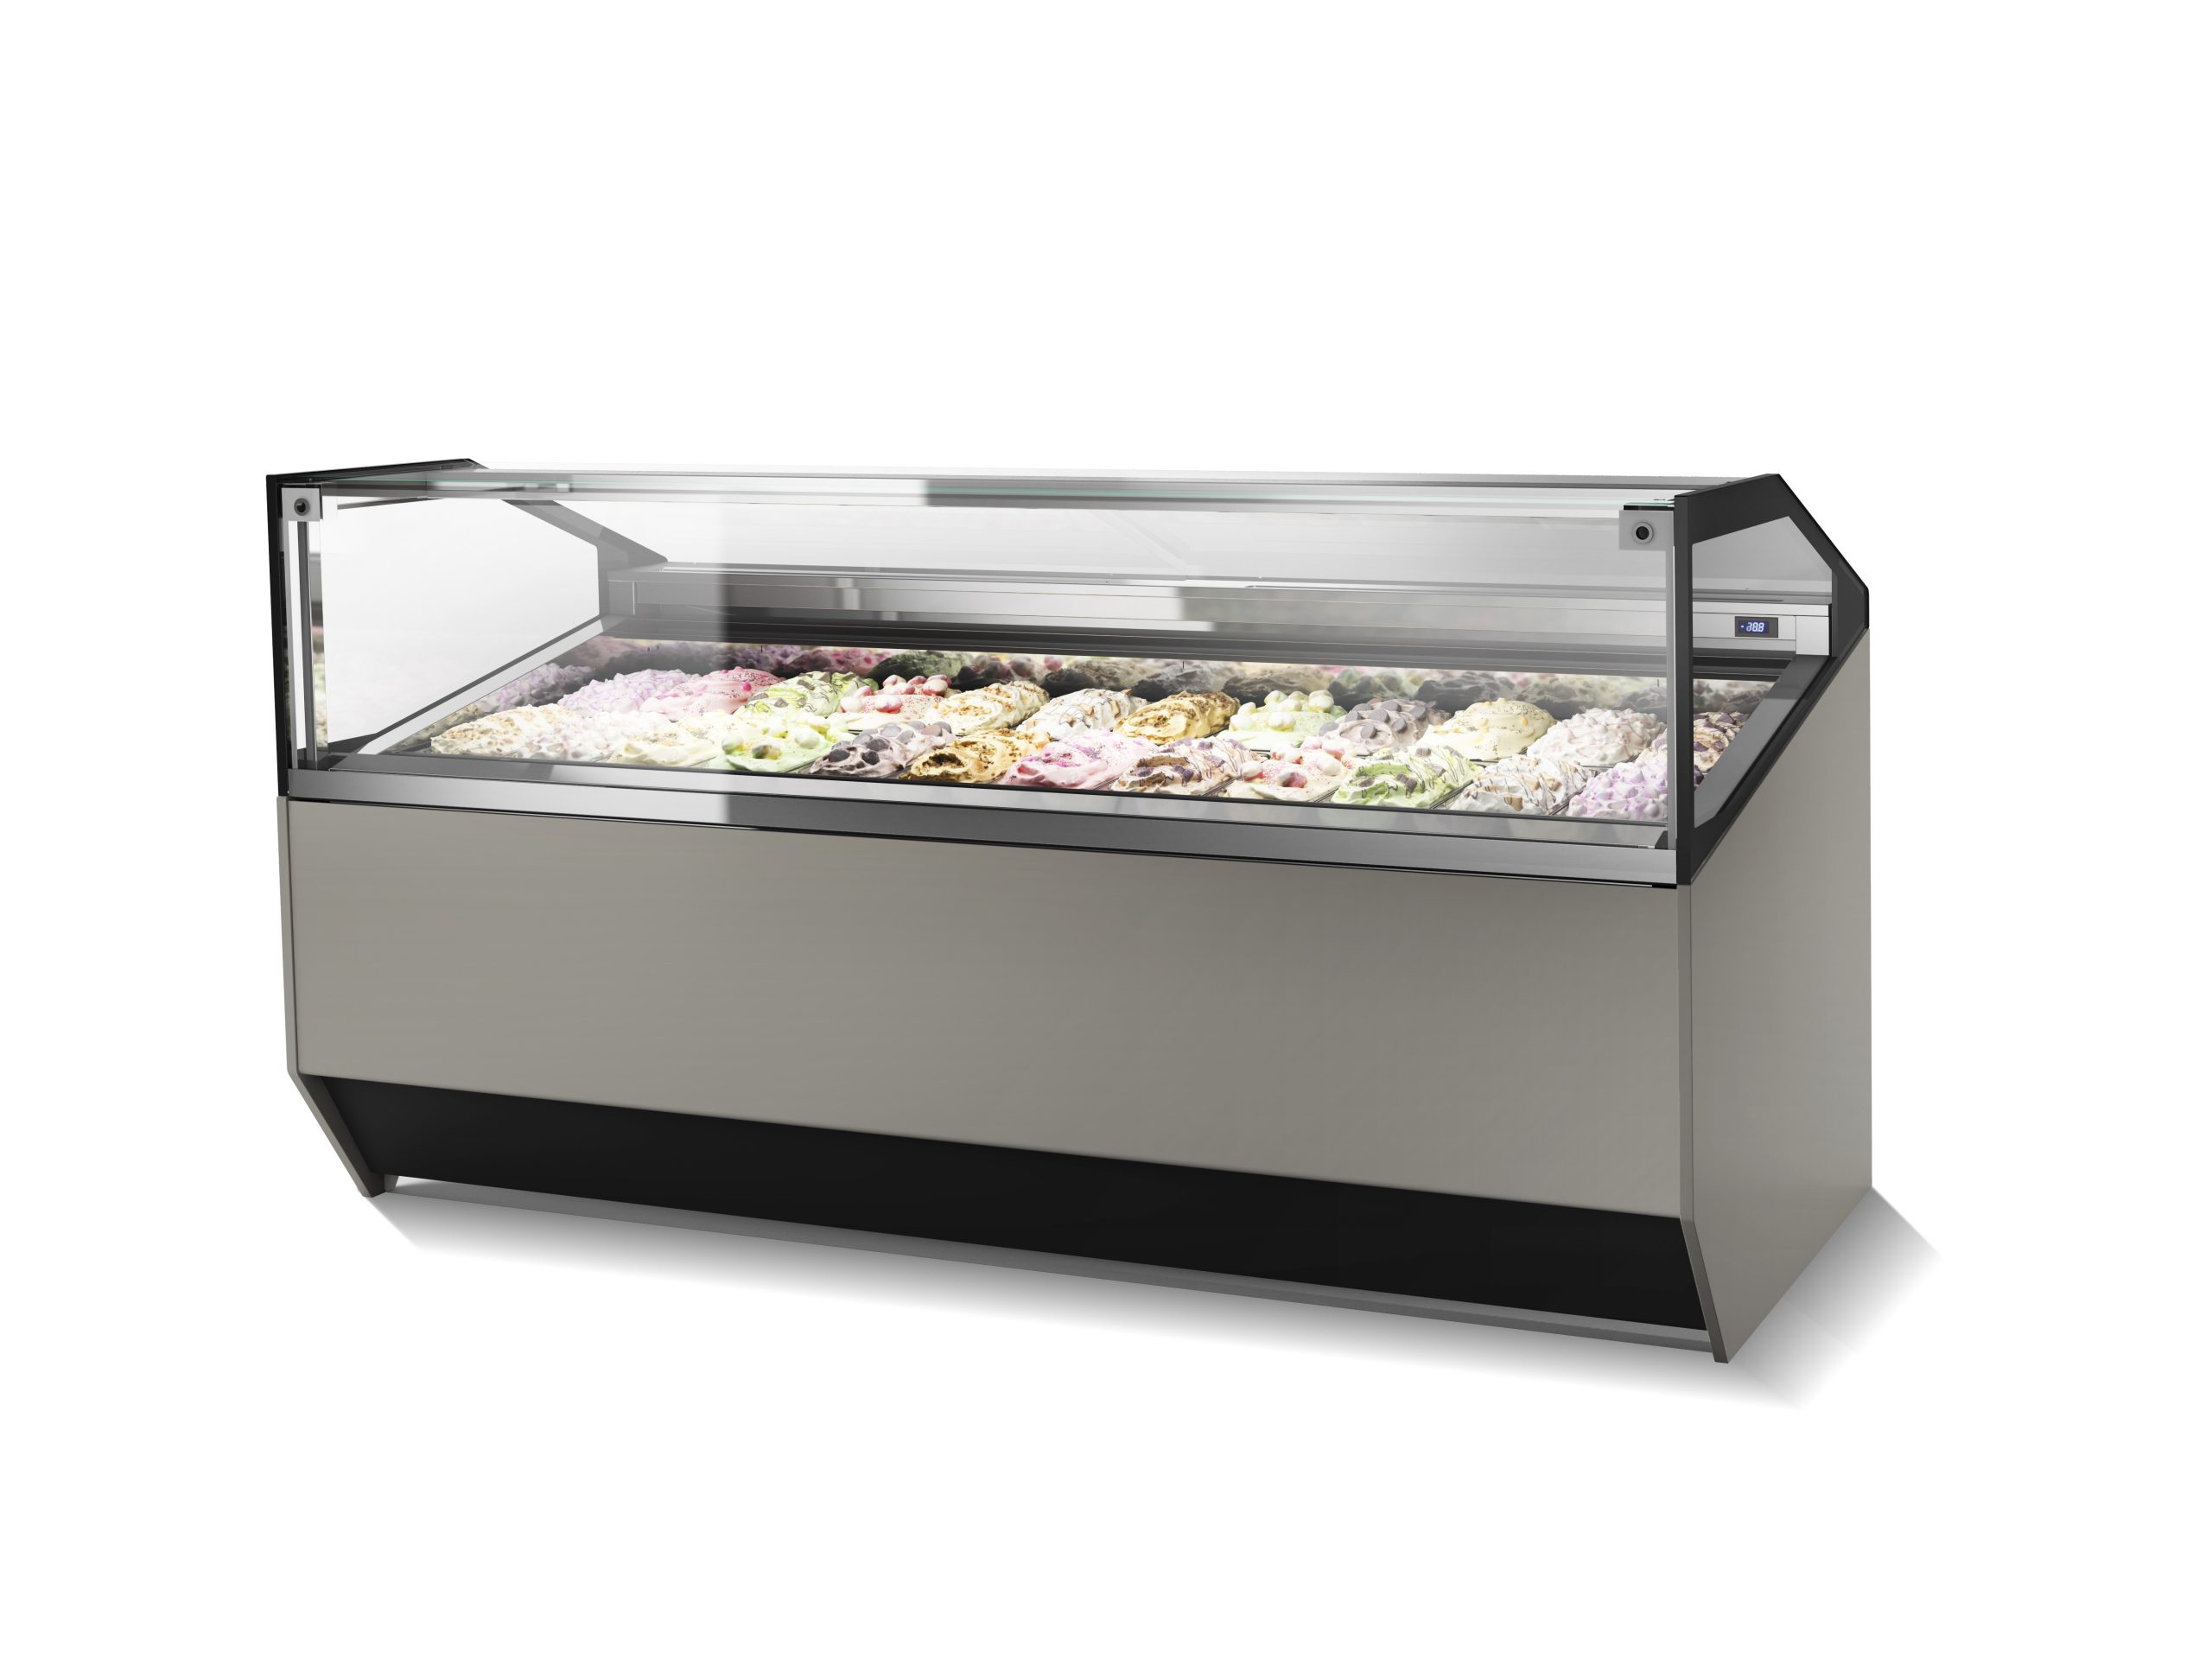 Supercapri creates a super display for ice cream and gelato